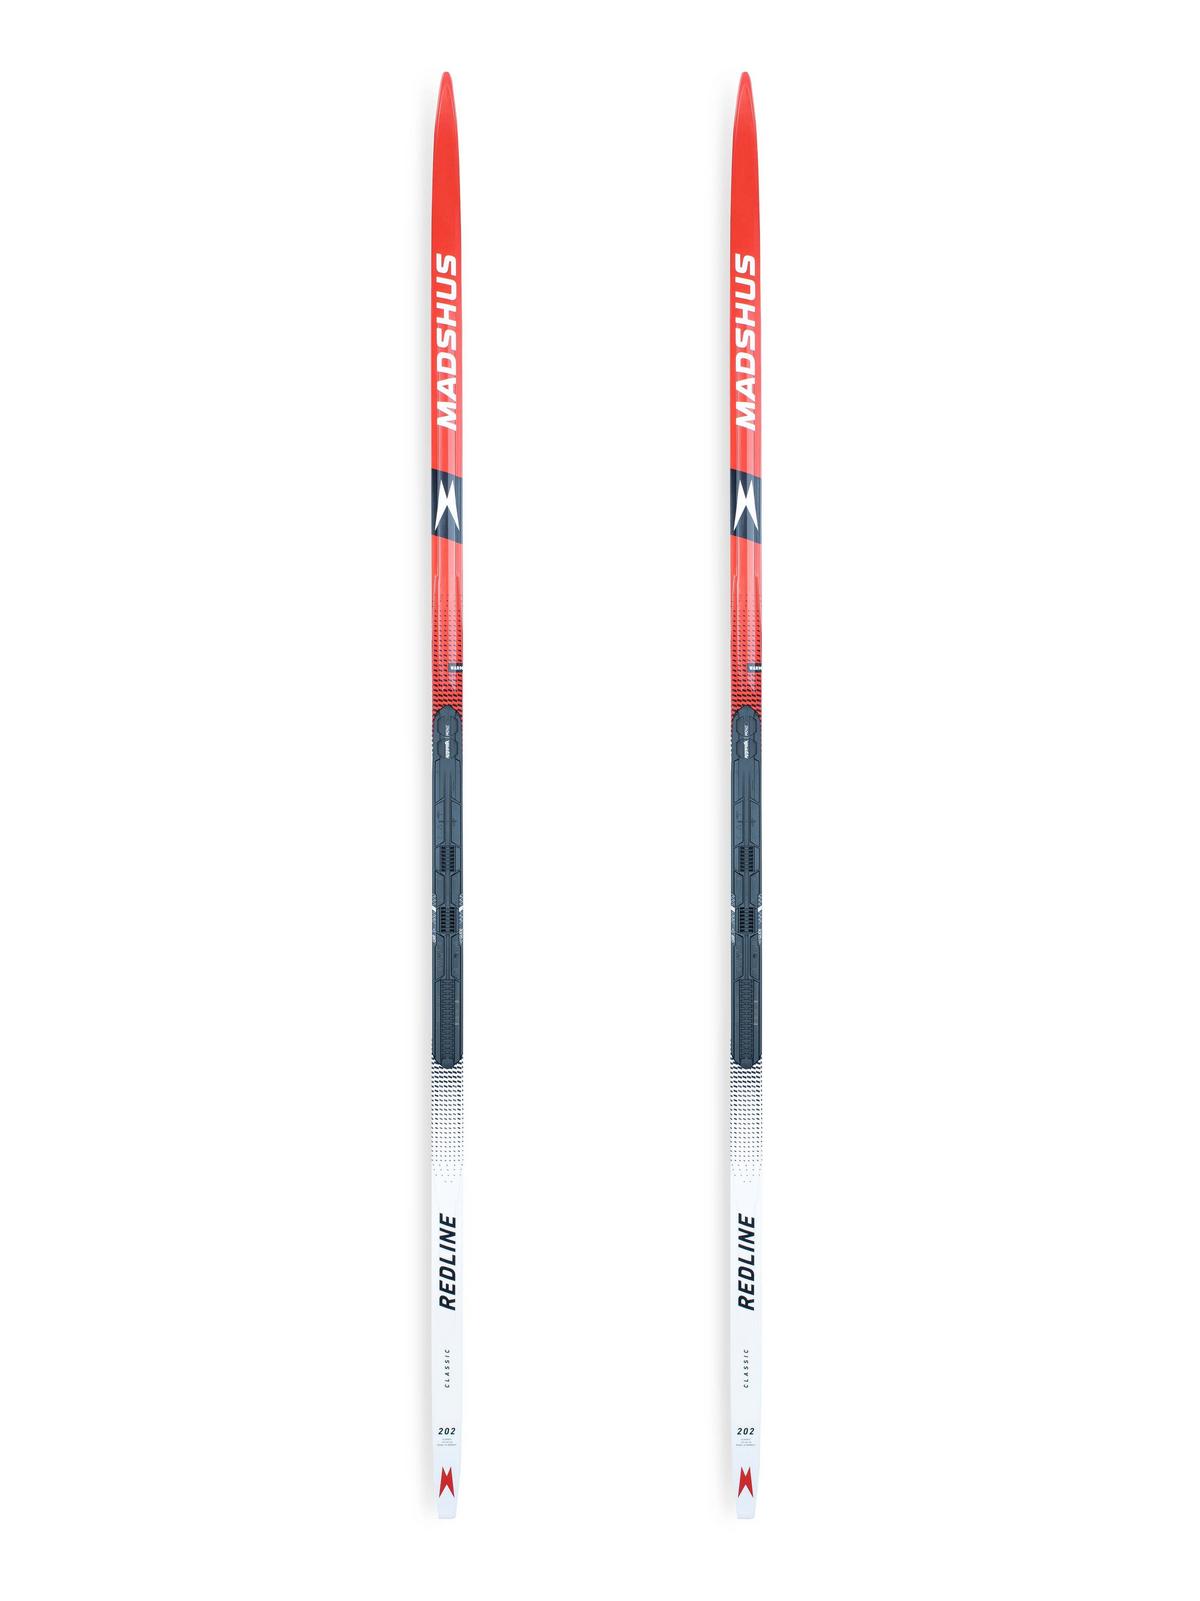 Madshus Redline Classic Warm Skis 2024 | Madshus Skis